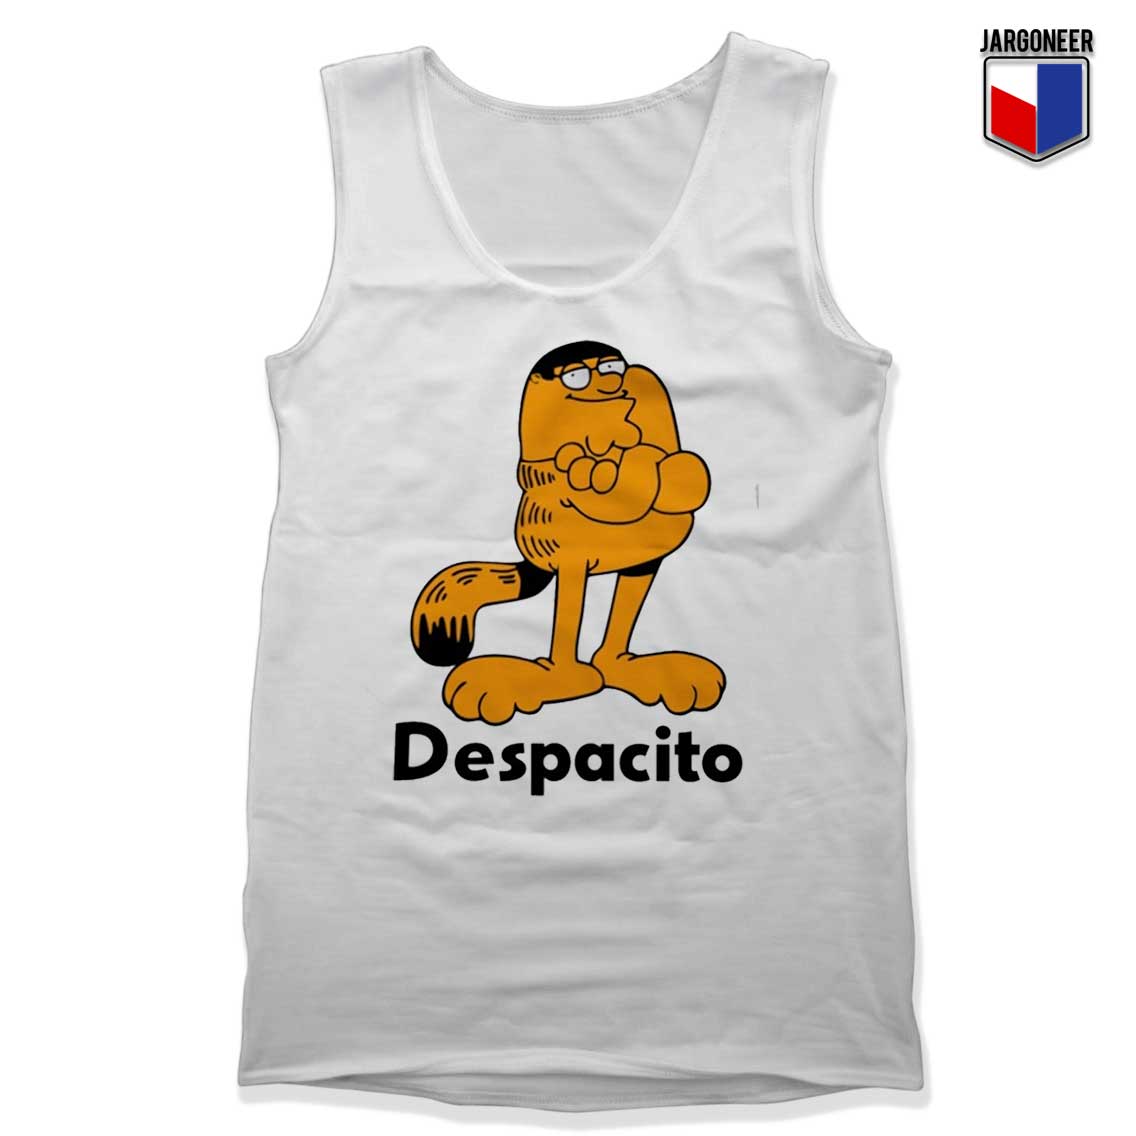 Garfield Despacito Tank Top - Shop Unique Graphic Cool Shirt Designs